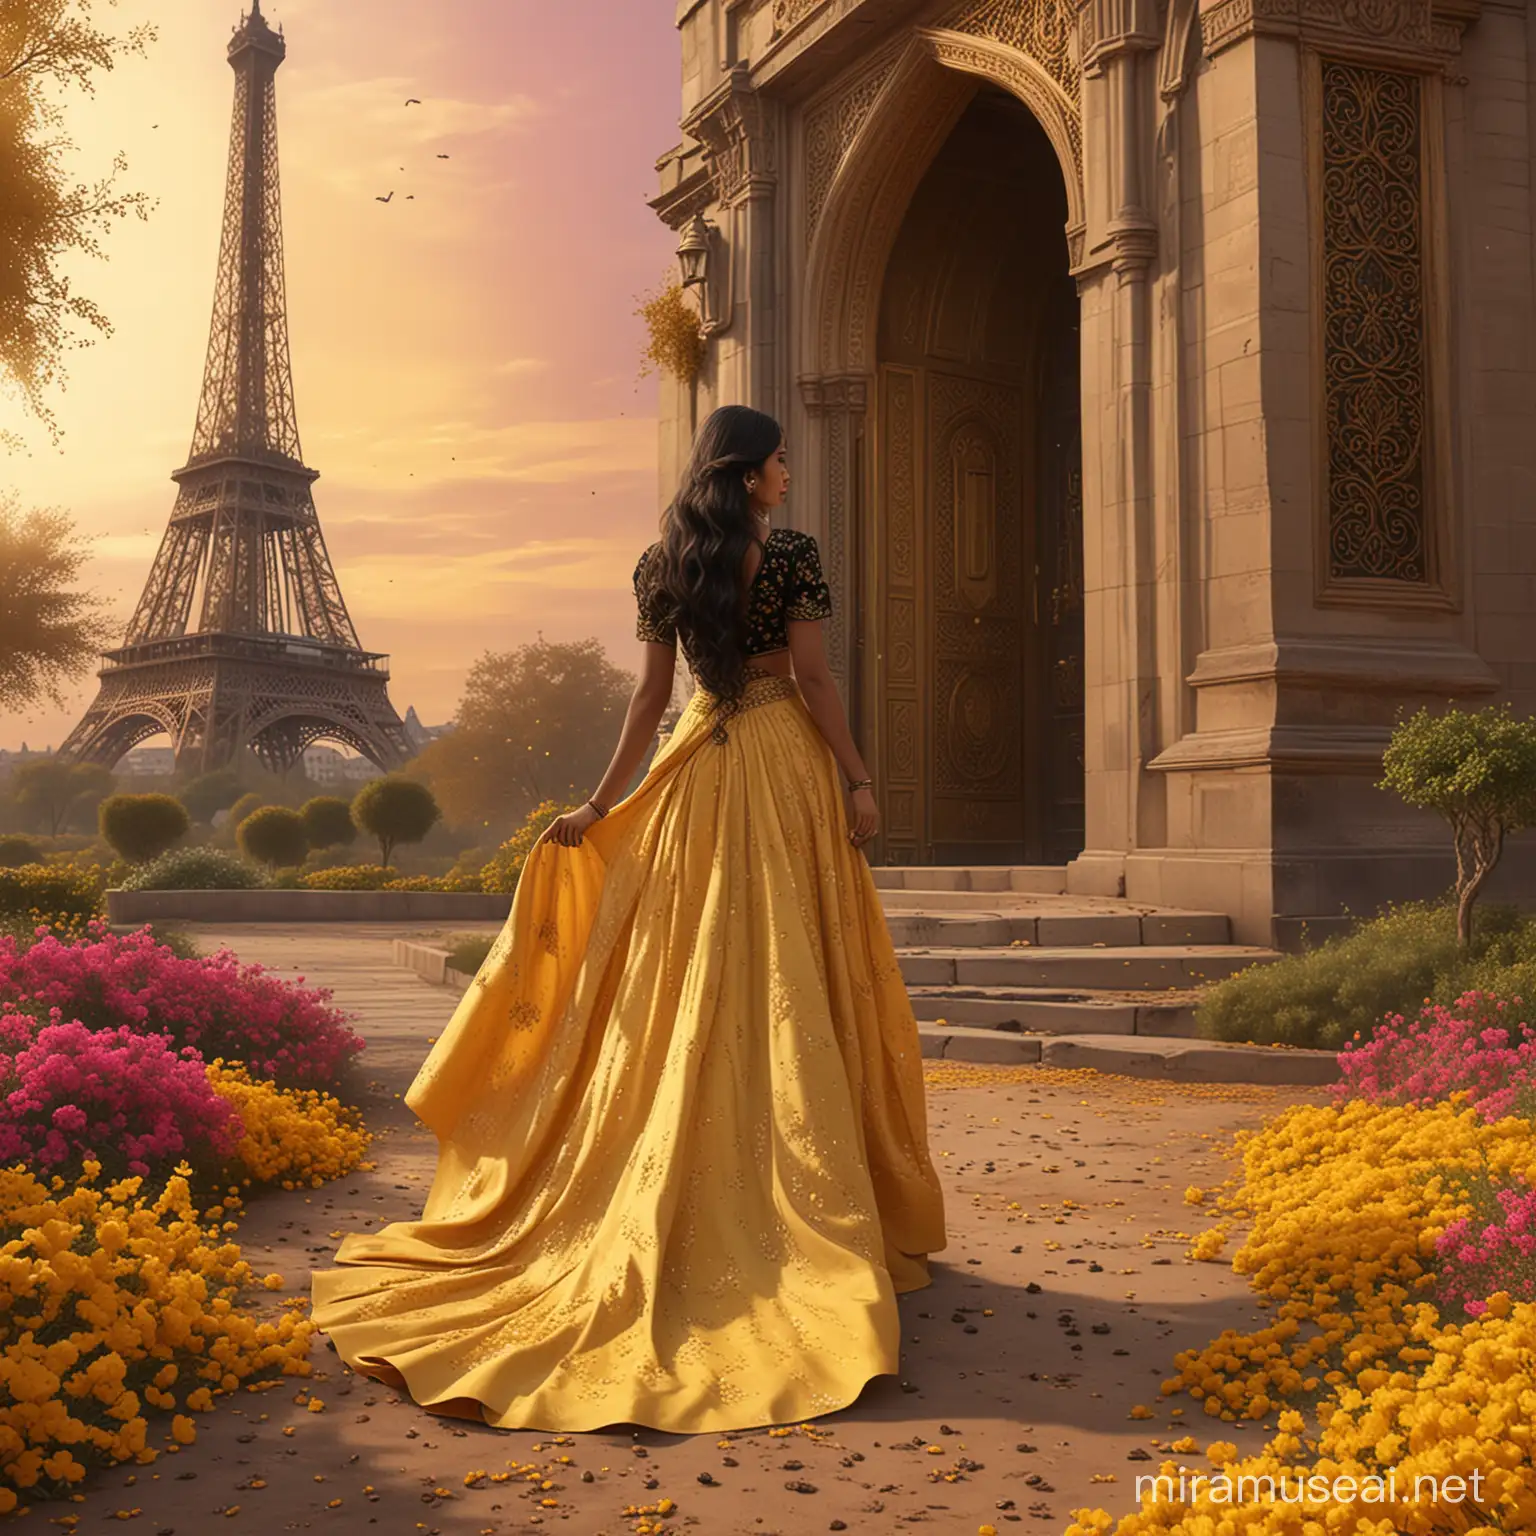 Elegant Indian Princess Walking towards Golden Arabian Door in Fantasy Setting